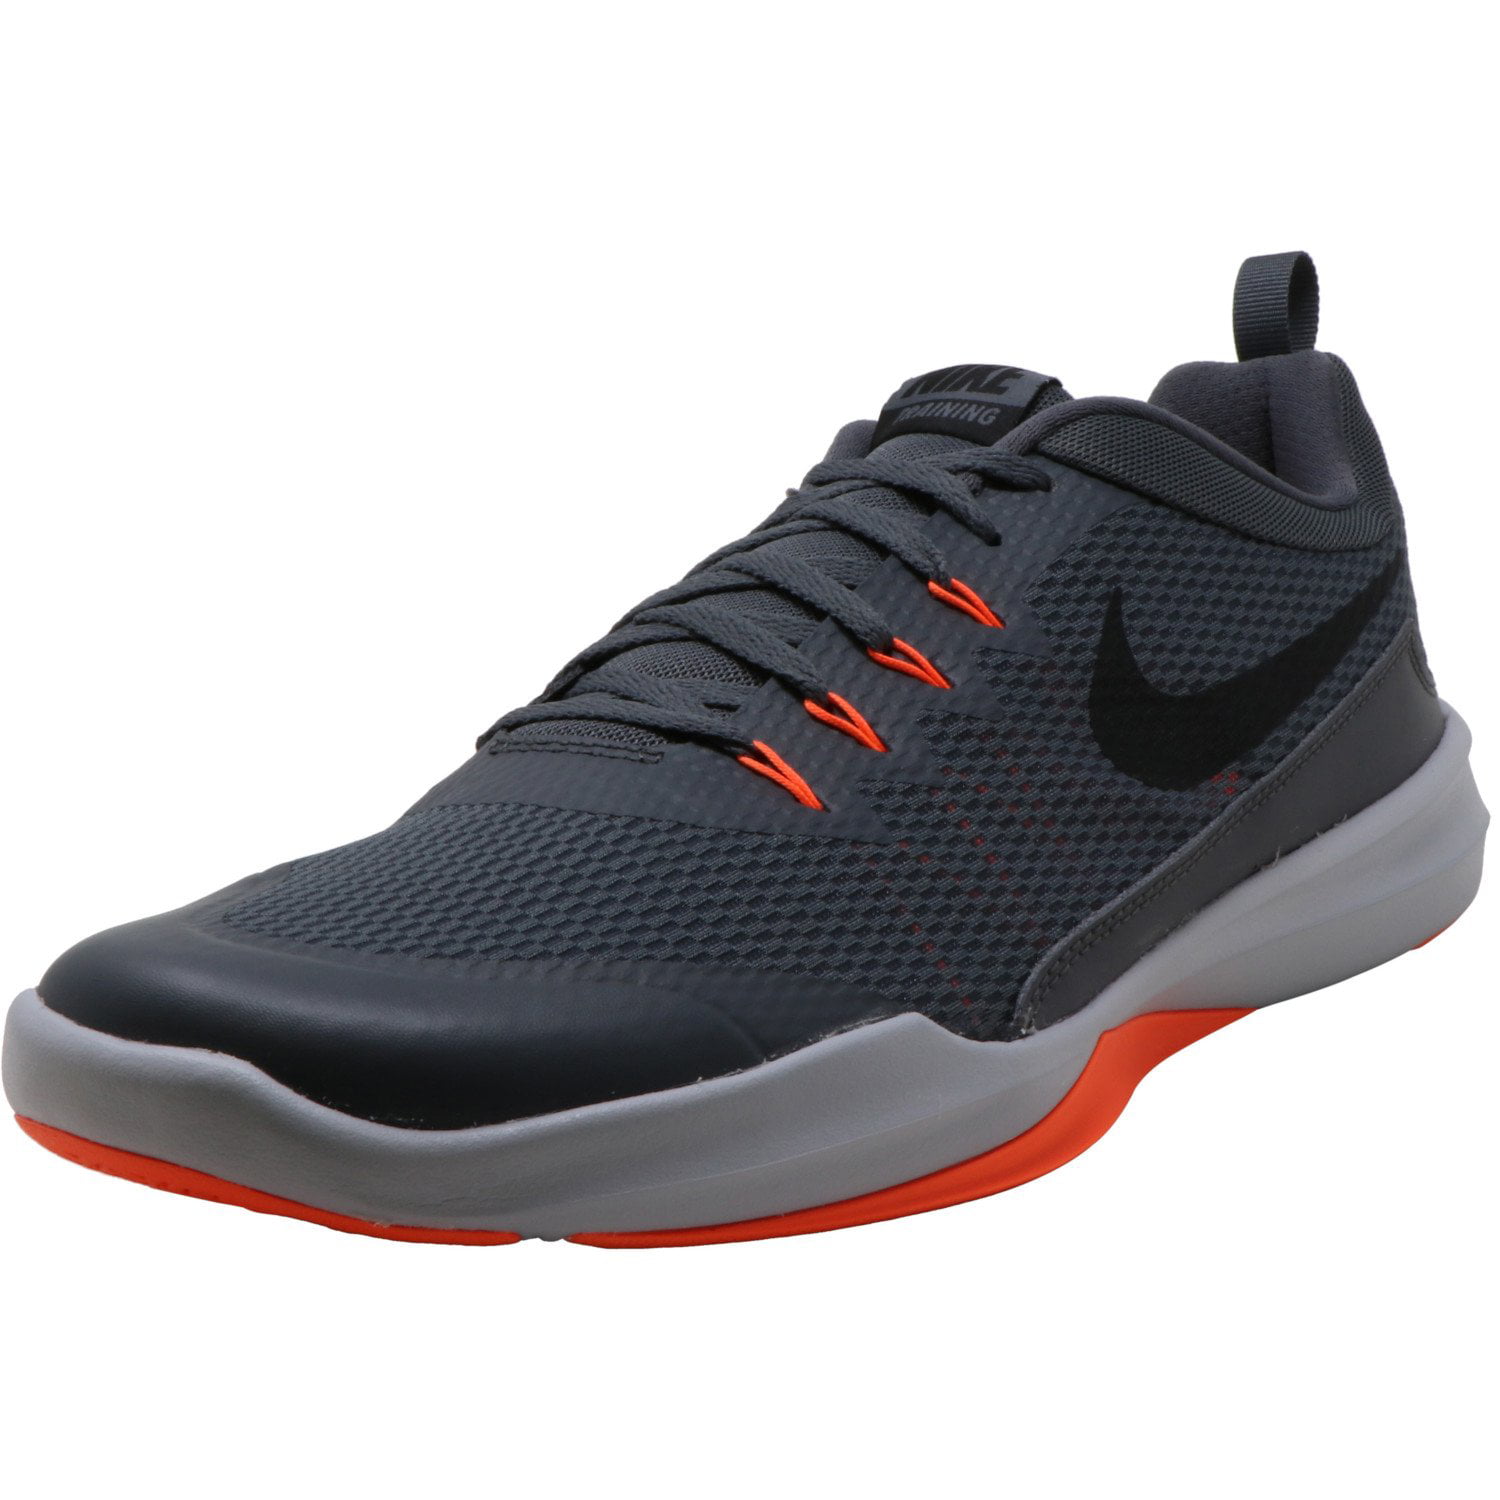 Nike - Nike Men's Legend Trainer Dark Grey / Black Hyper Orange Ankle ...